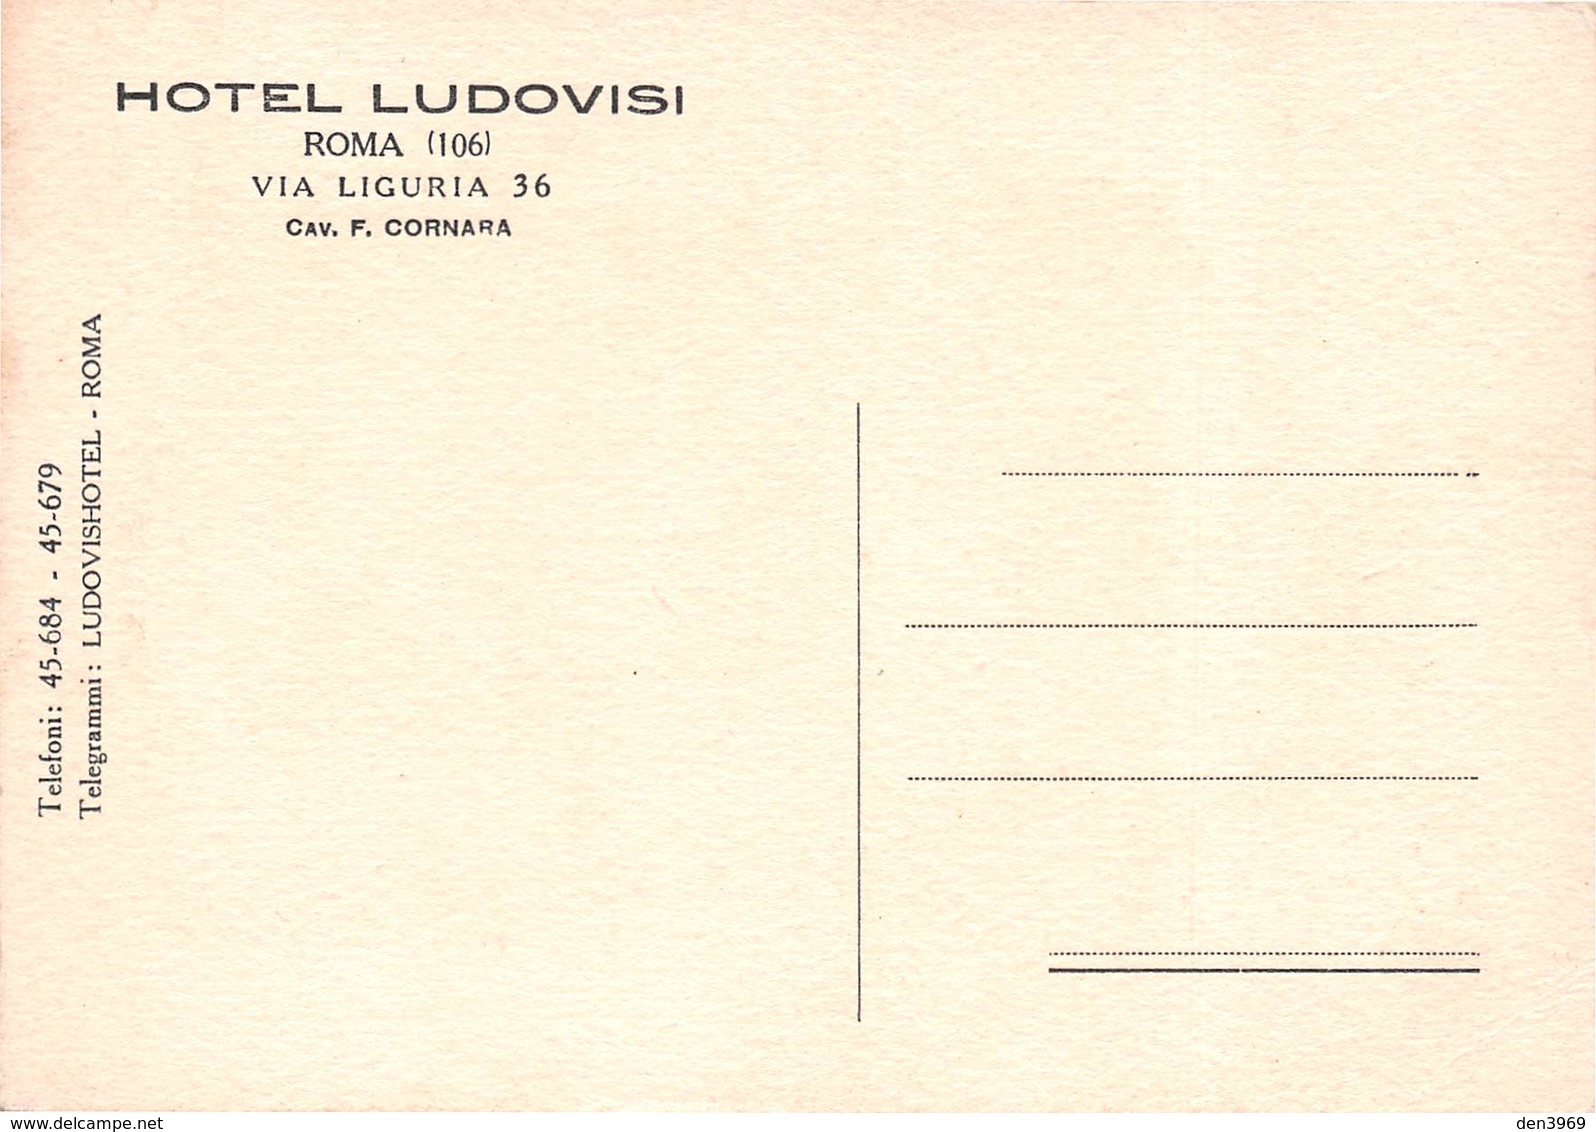 Italie - ROMA - Hotel Ludovisi, Via Liguria 36 - Cav. F. Cornara - Dessin - Wirtschaften, Hotels & Restaurants